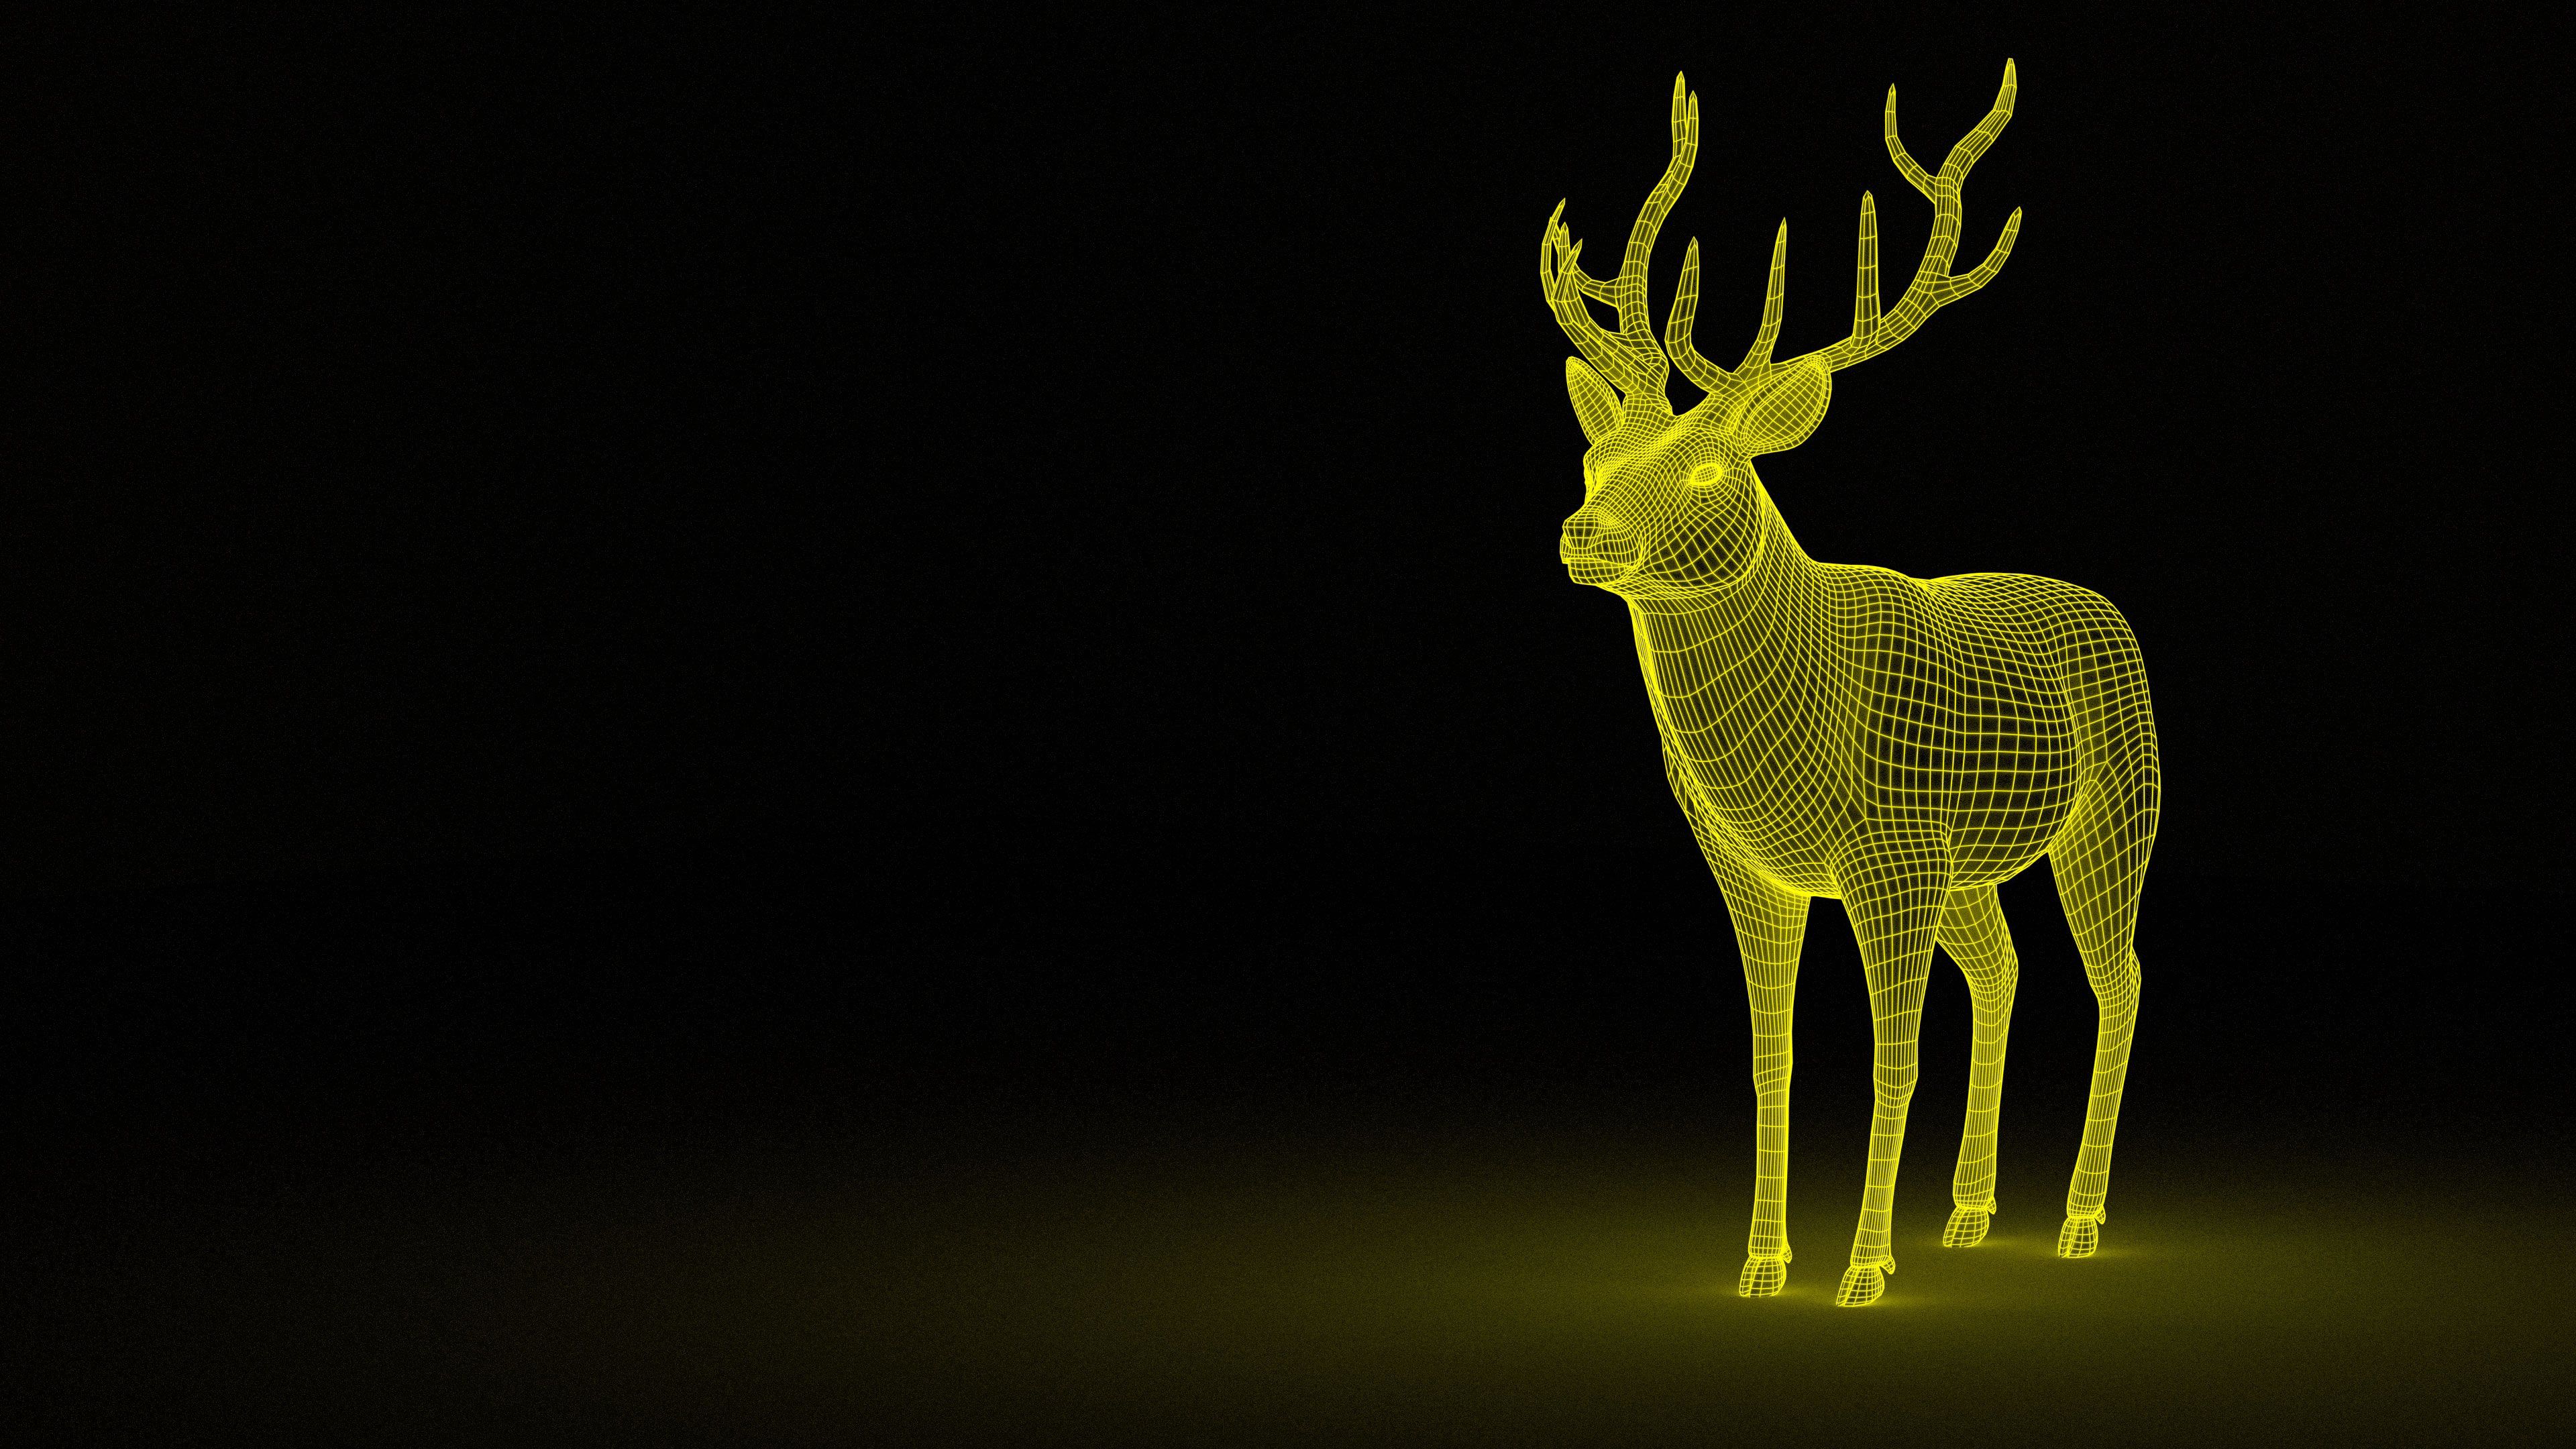 Windows Backgrounds deer, abstract, grid, backlight, illumination